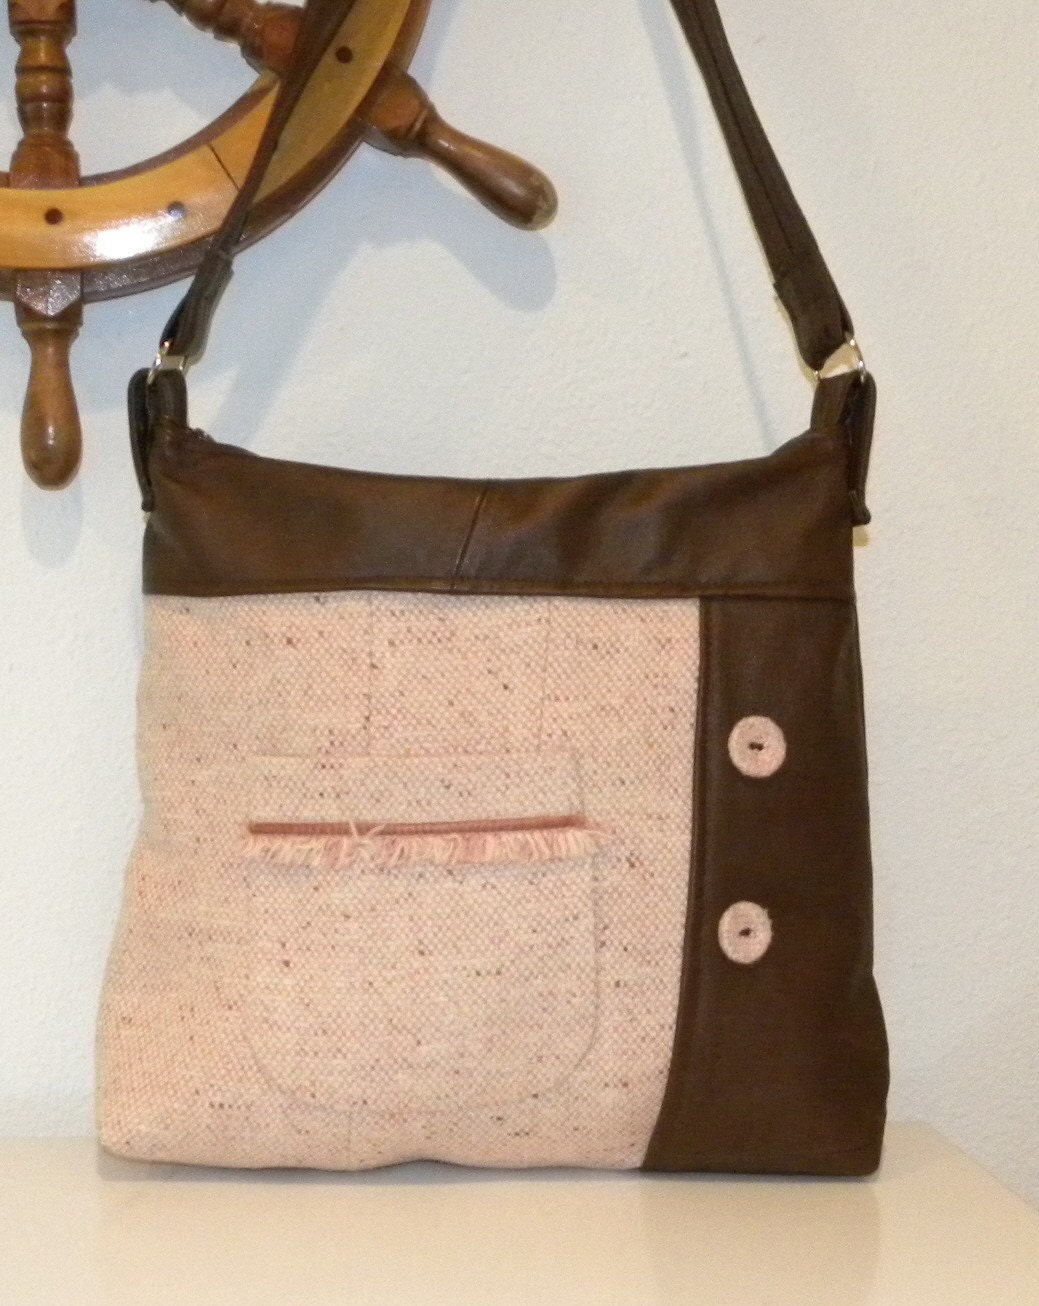 Handmade from a Reddish Brown Leather jacket and a Salmon Pink Tweed Jacket - Handbag - hobo bag - Tote Bag - Purse